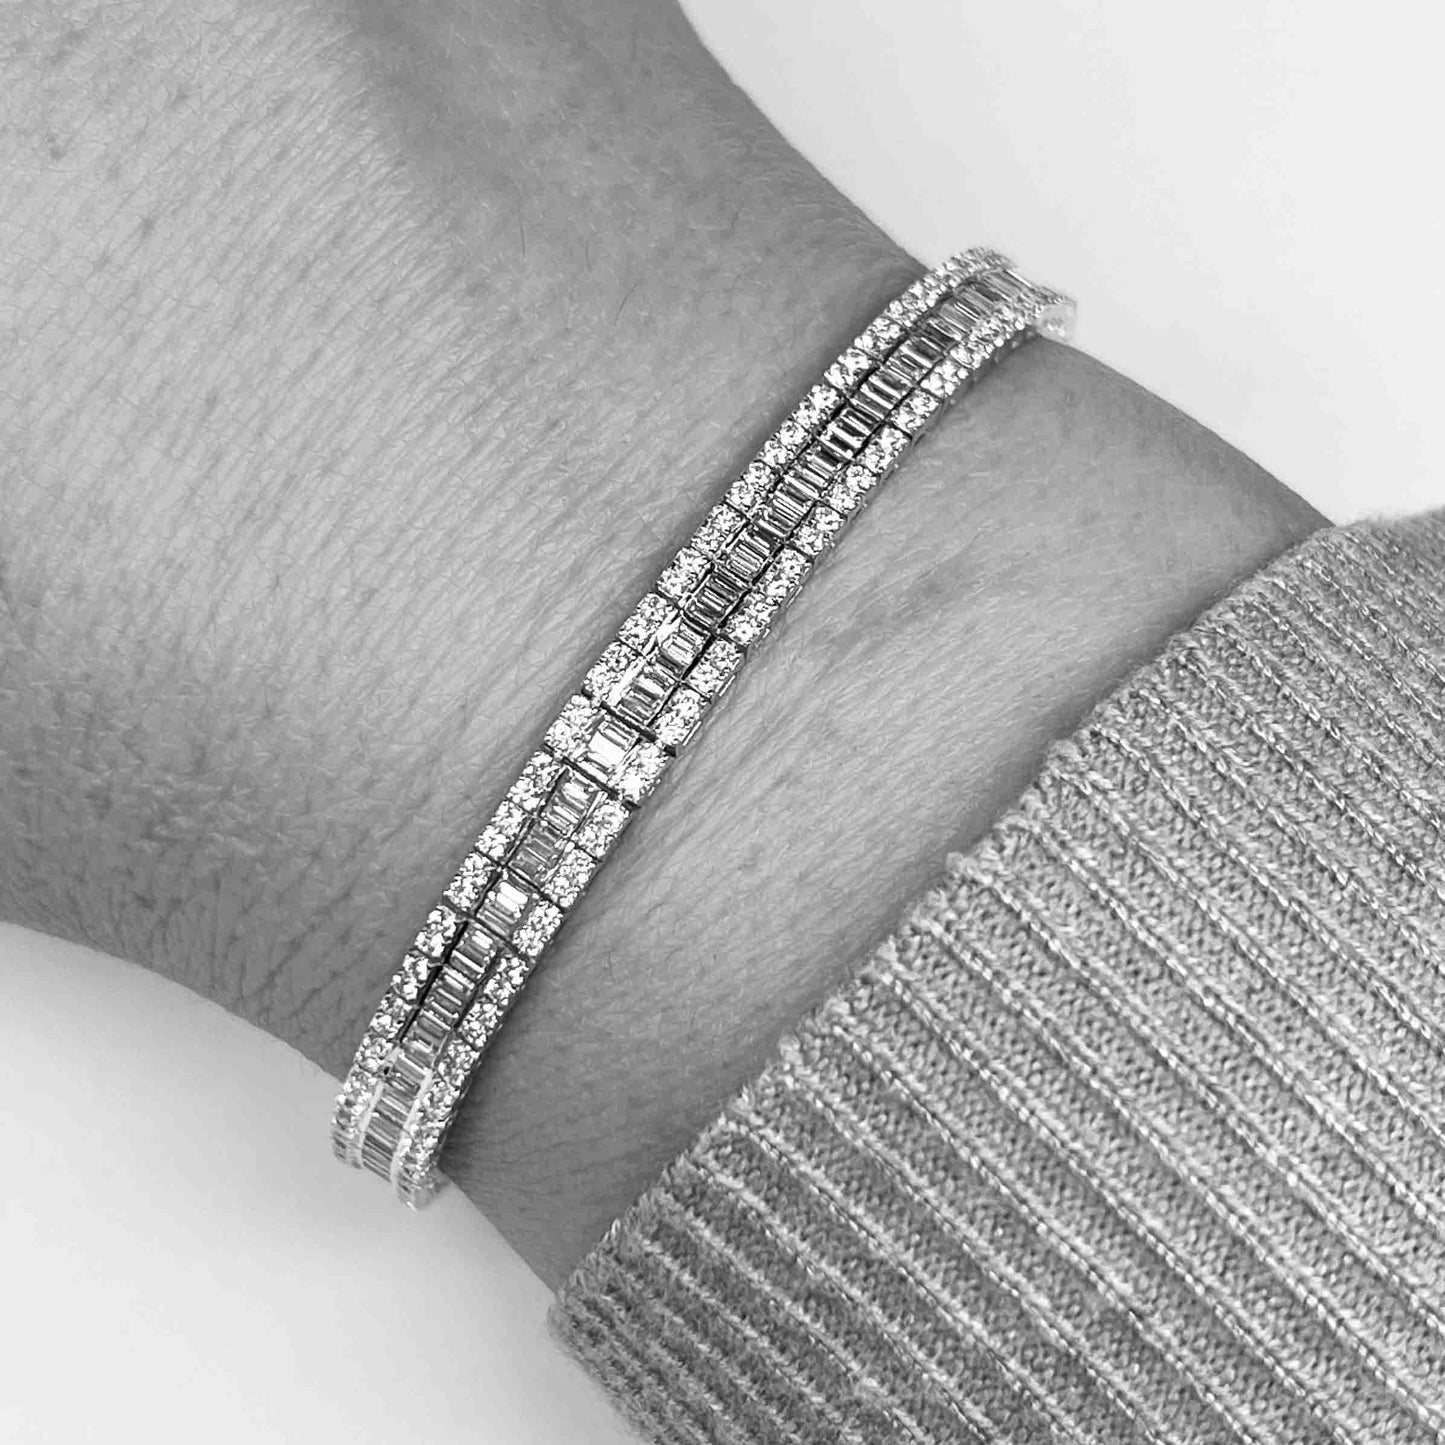 18kw diamond bracelet